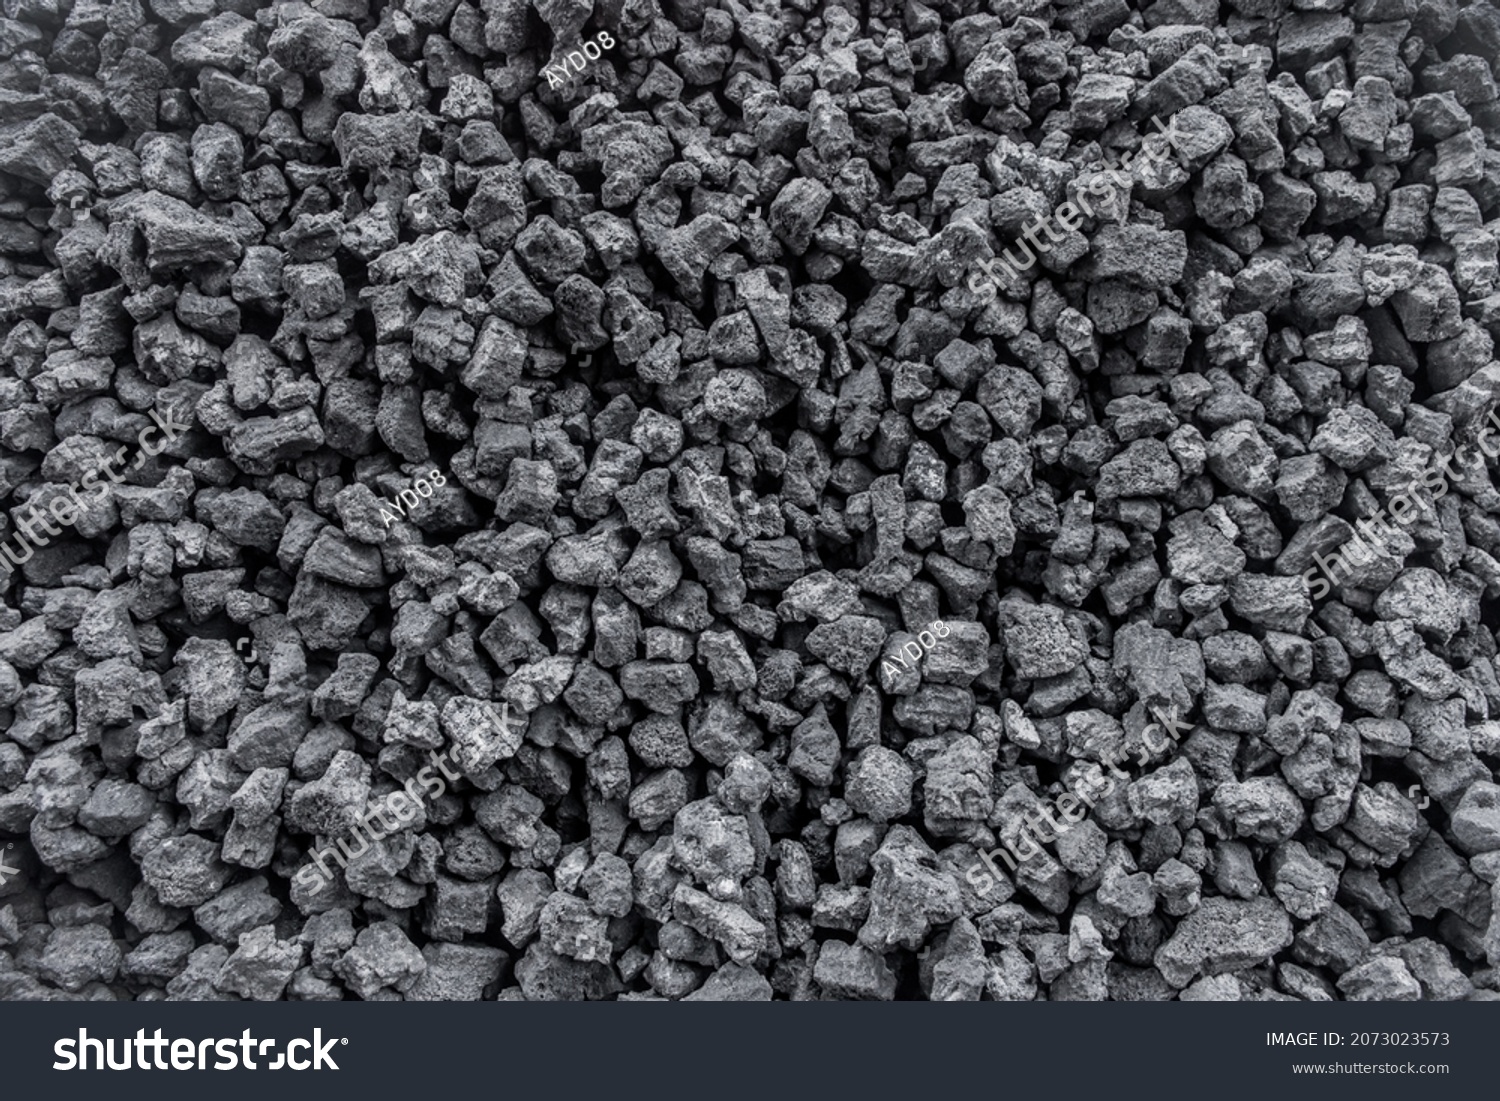 Coking coal and steam coal фото 118